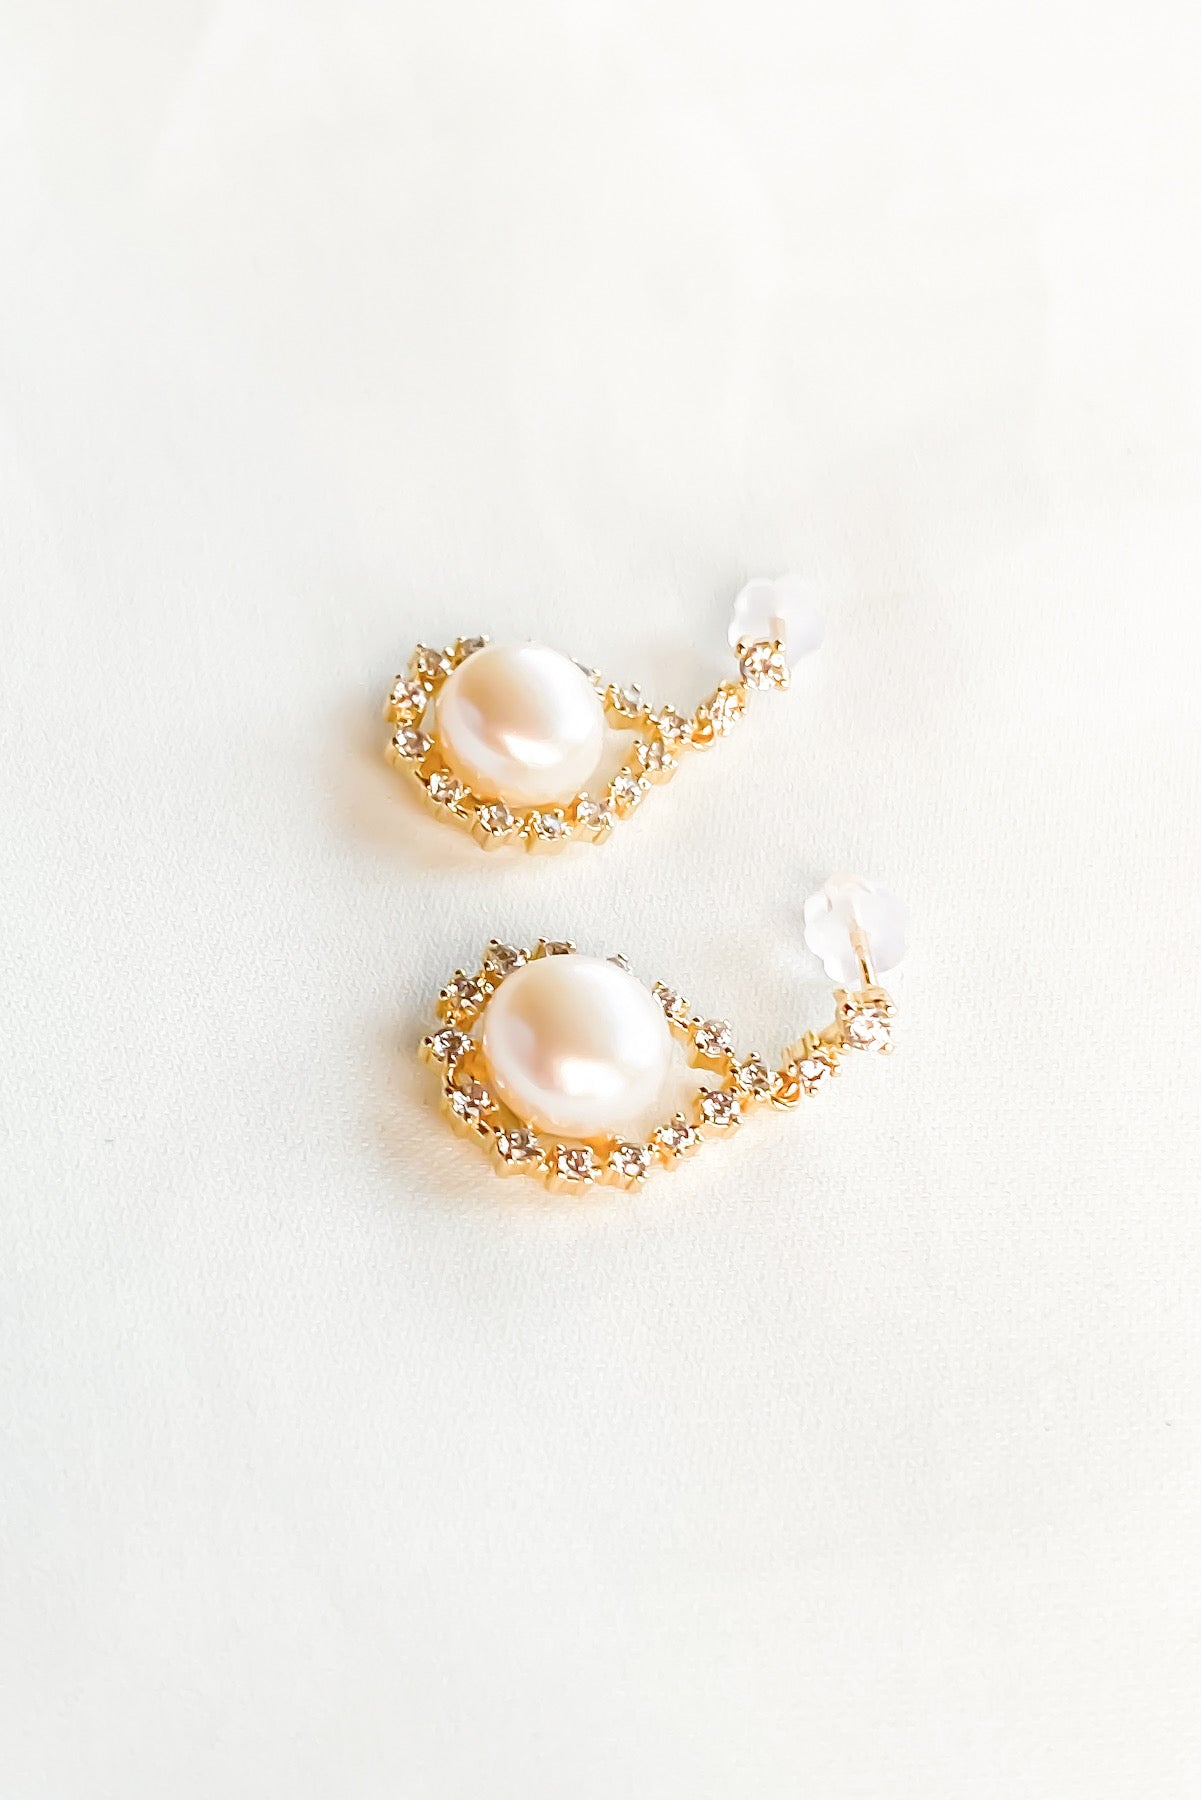 SKYE San Francisco Shop SF Chic Modern Elegant Classy Women Jewelry French Parisian Minimalist Amie 18K Gold Freshwater Pearl Crystal Earrings 2